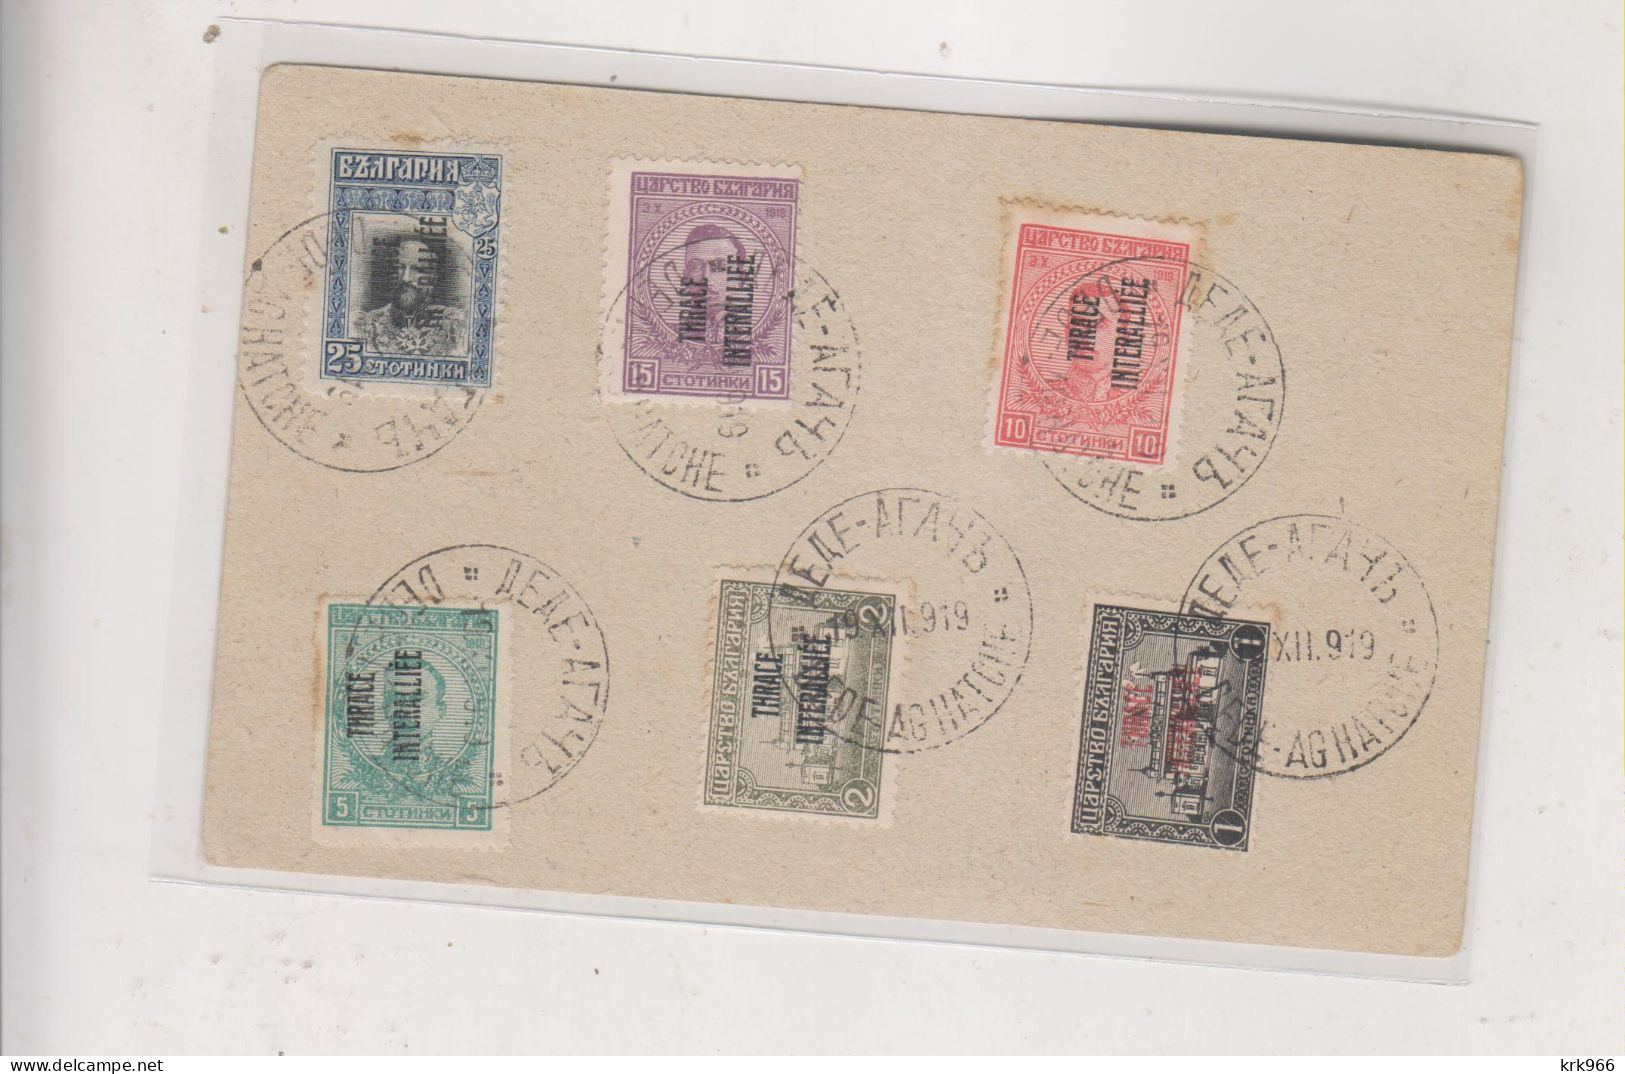 BULGARIA 1919 THRACE Nice Postal Stationery - Oorlog